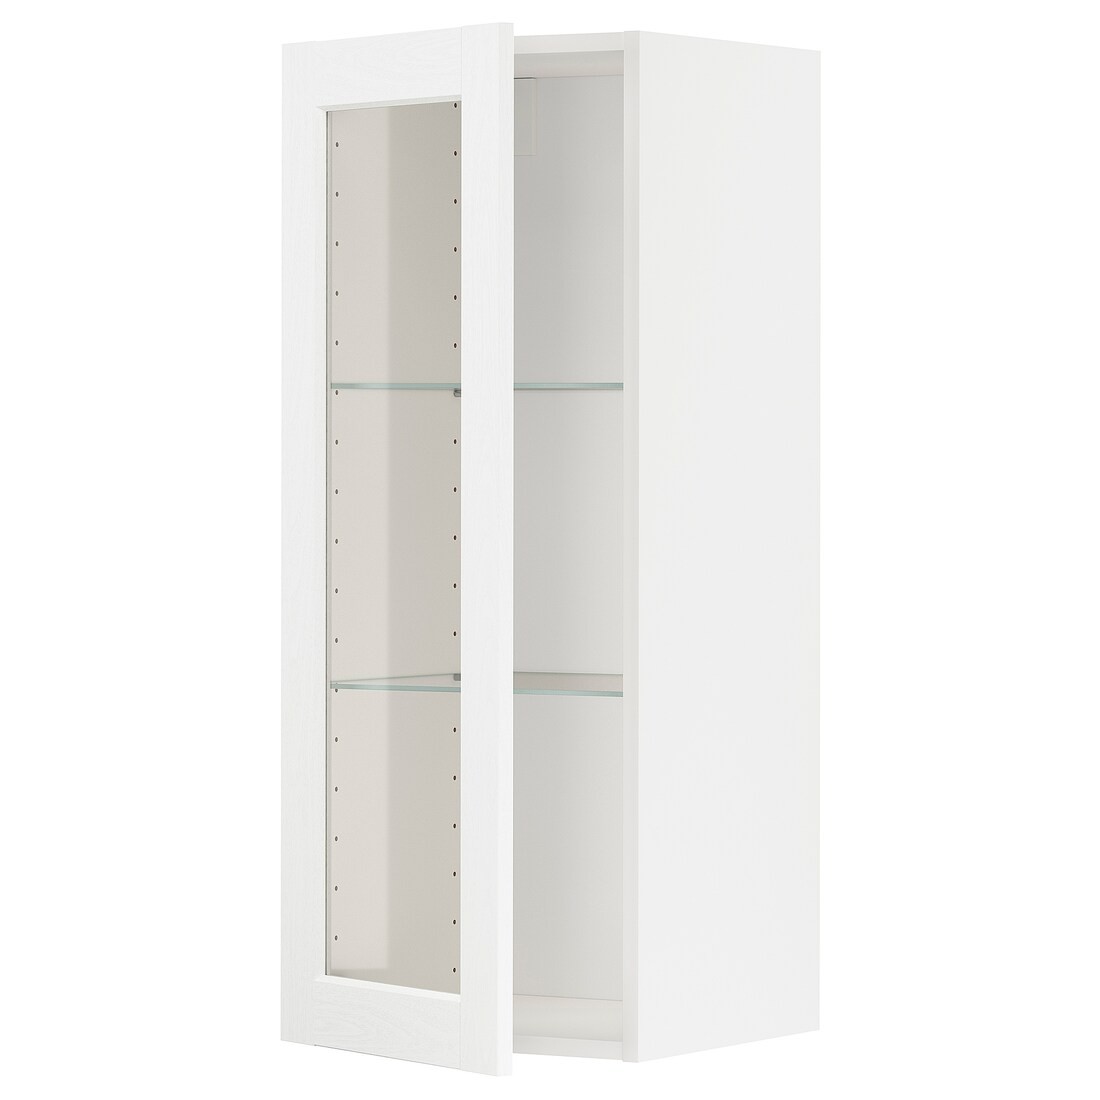 IKEA METOD МЕТОД Навесной шкаф, белый Enköping / белый имитация дерева, 40x100 см 09473472 094.734.72